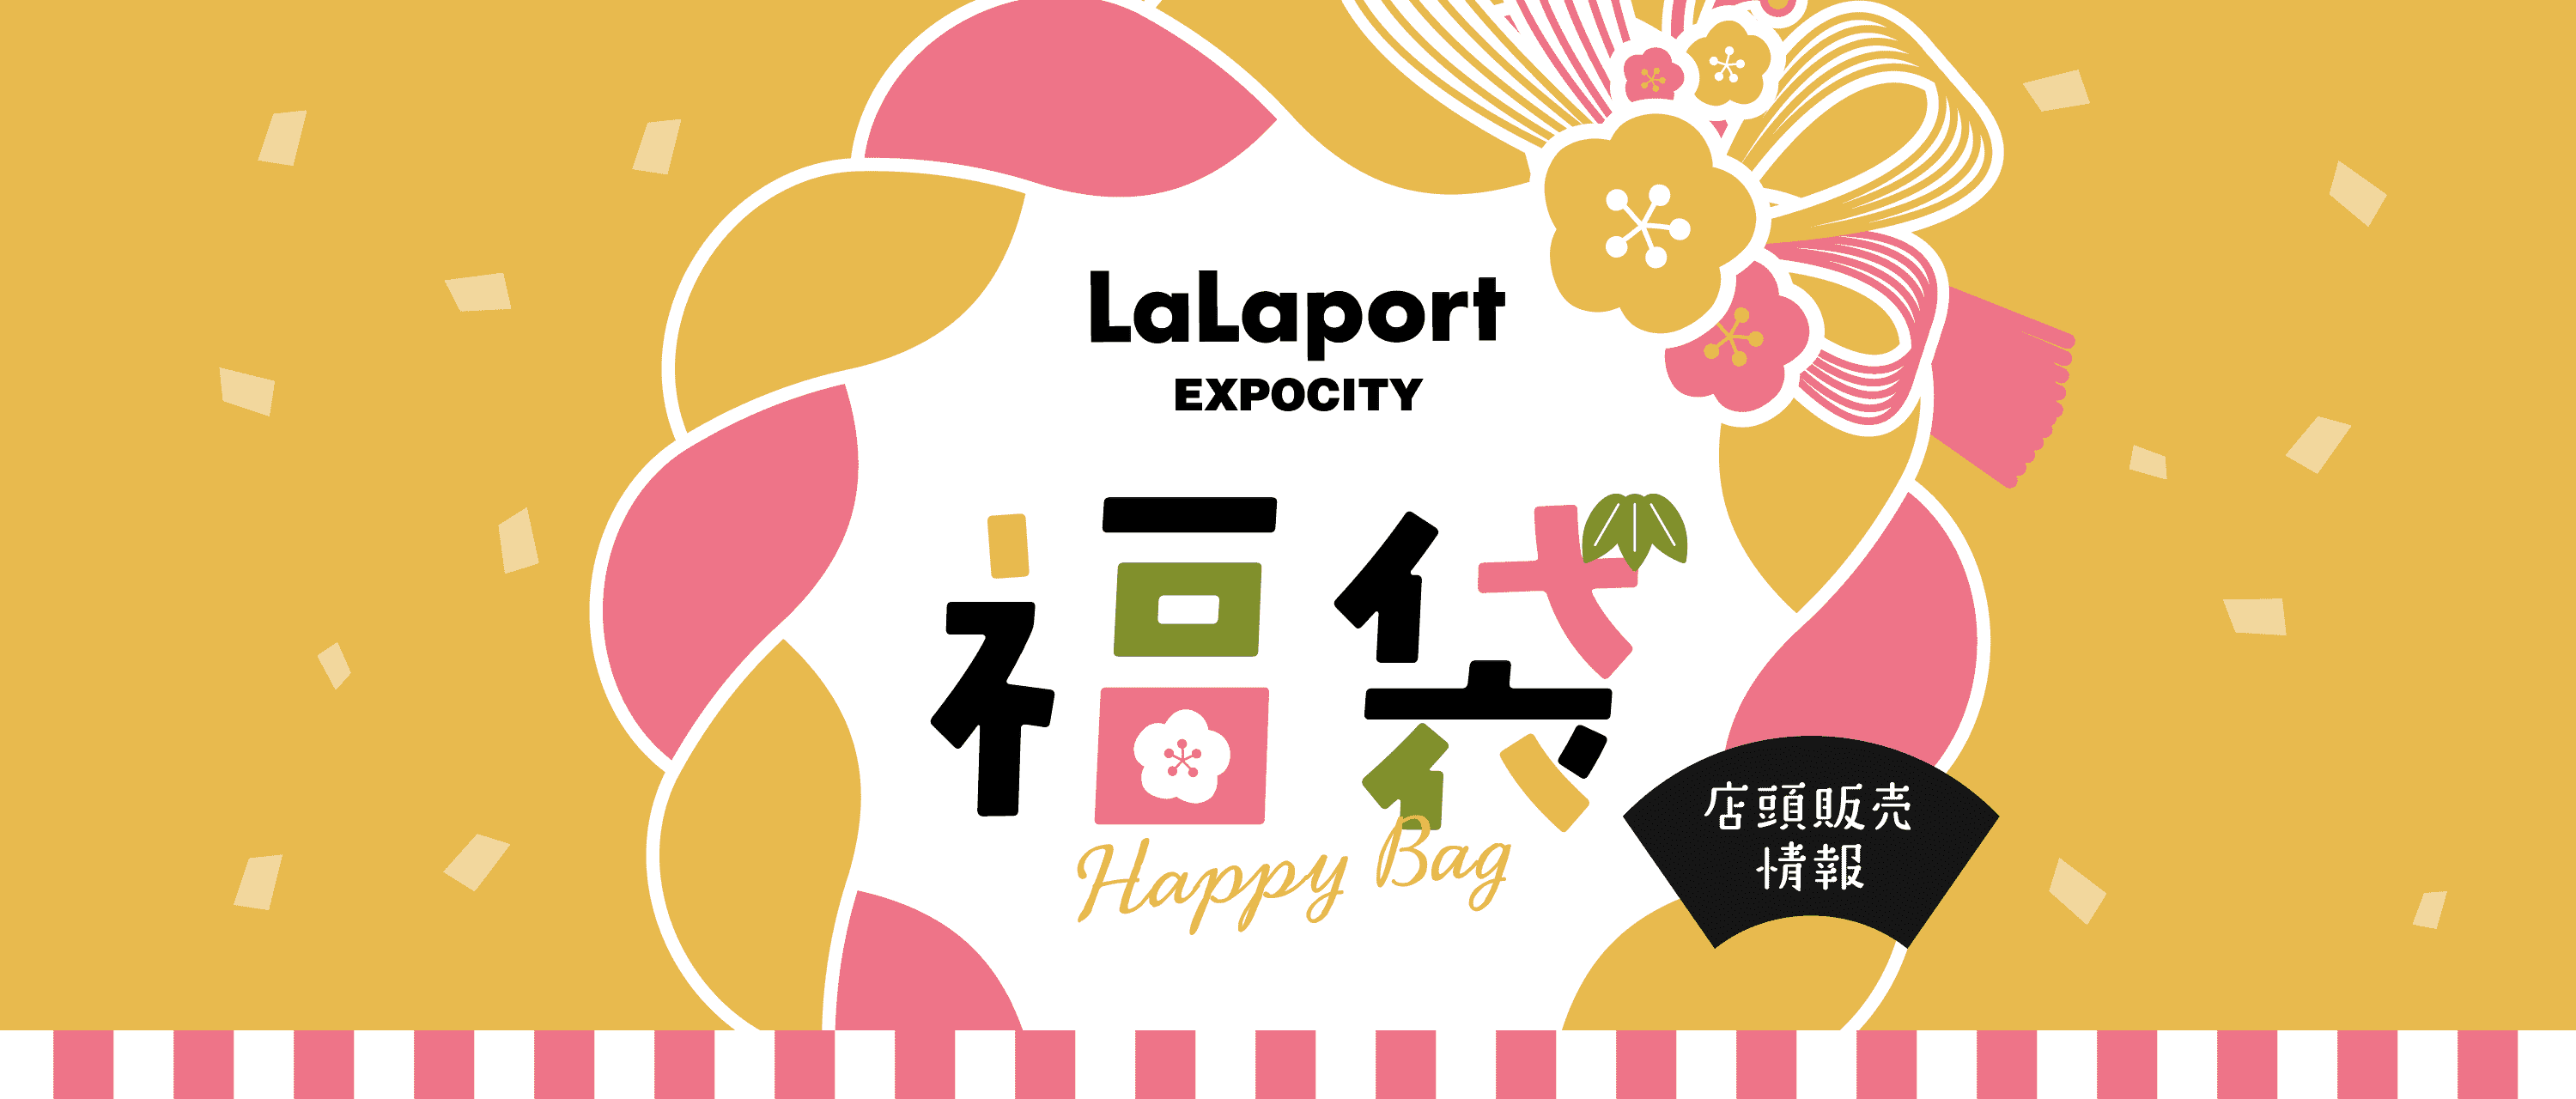 LaLaport EXPOCITY 福袋 店頭販売情報